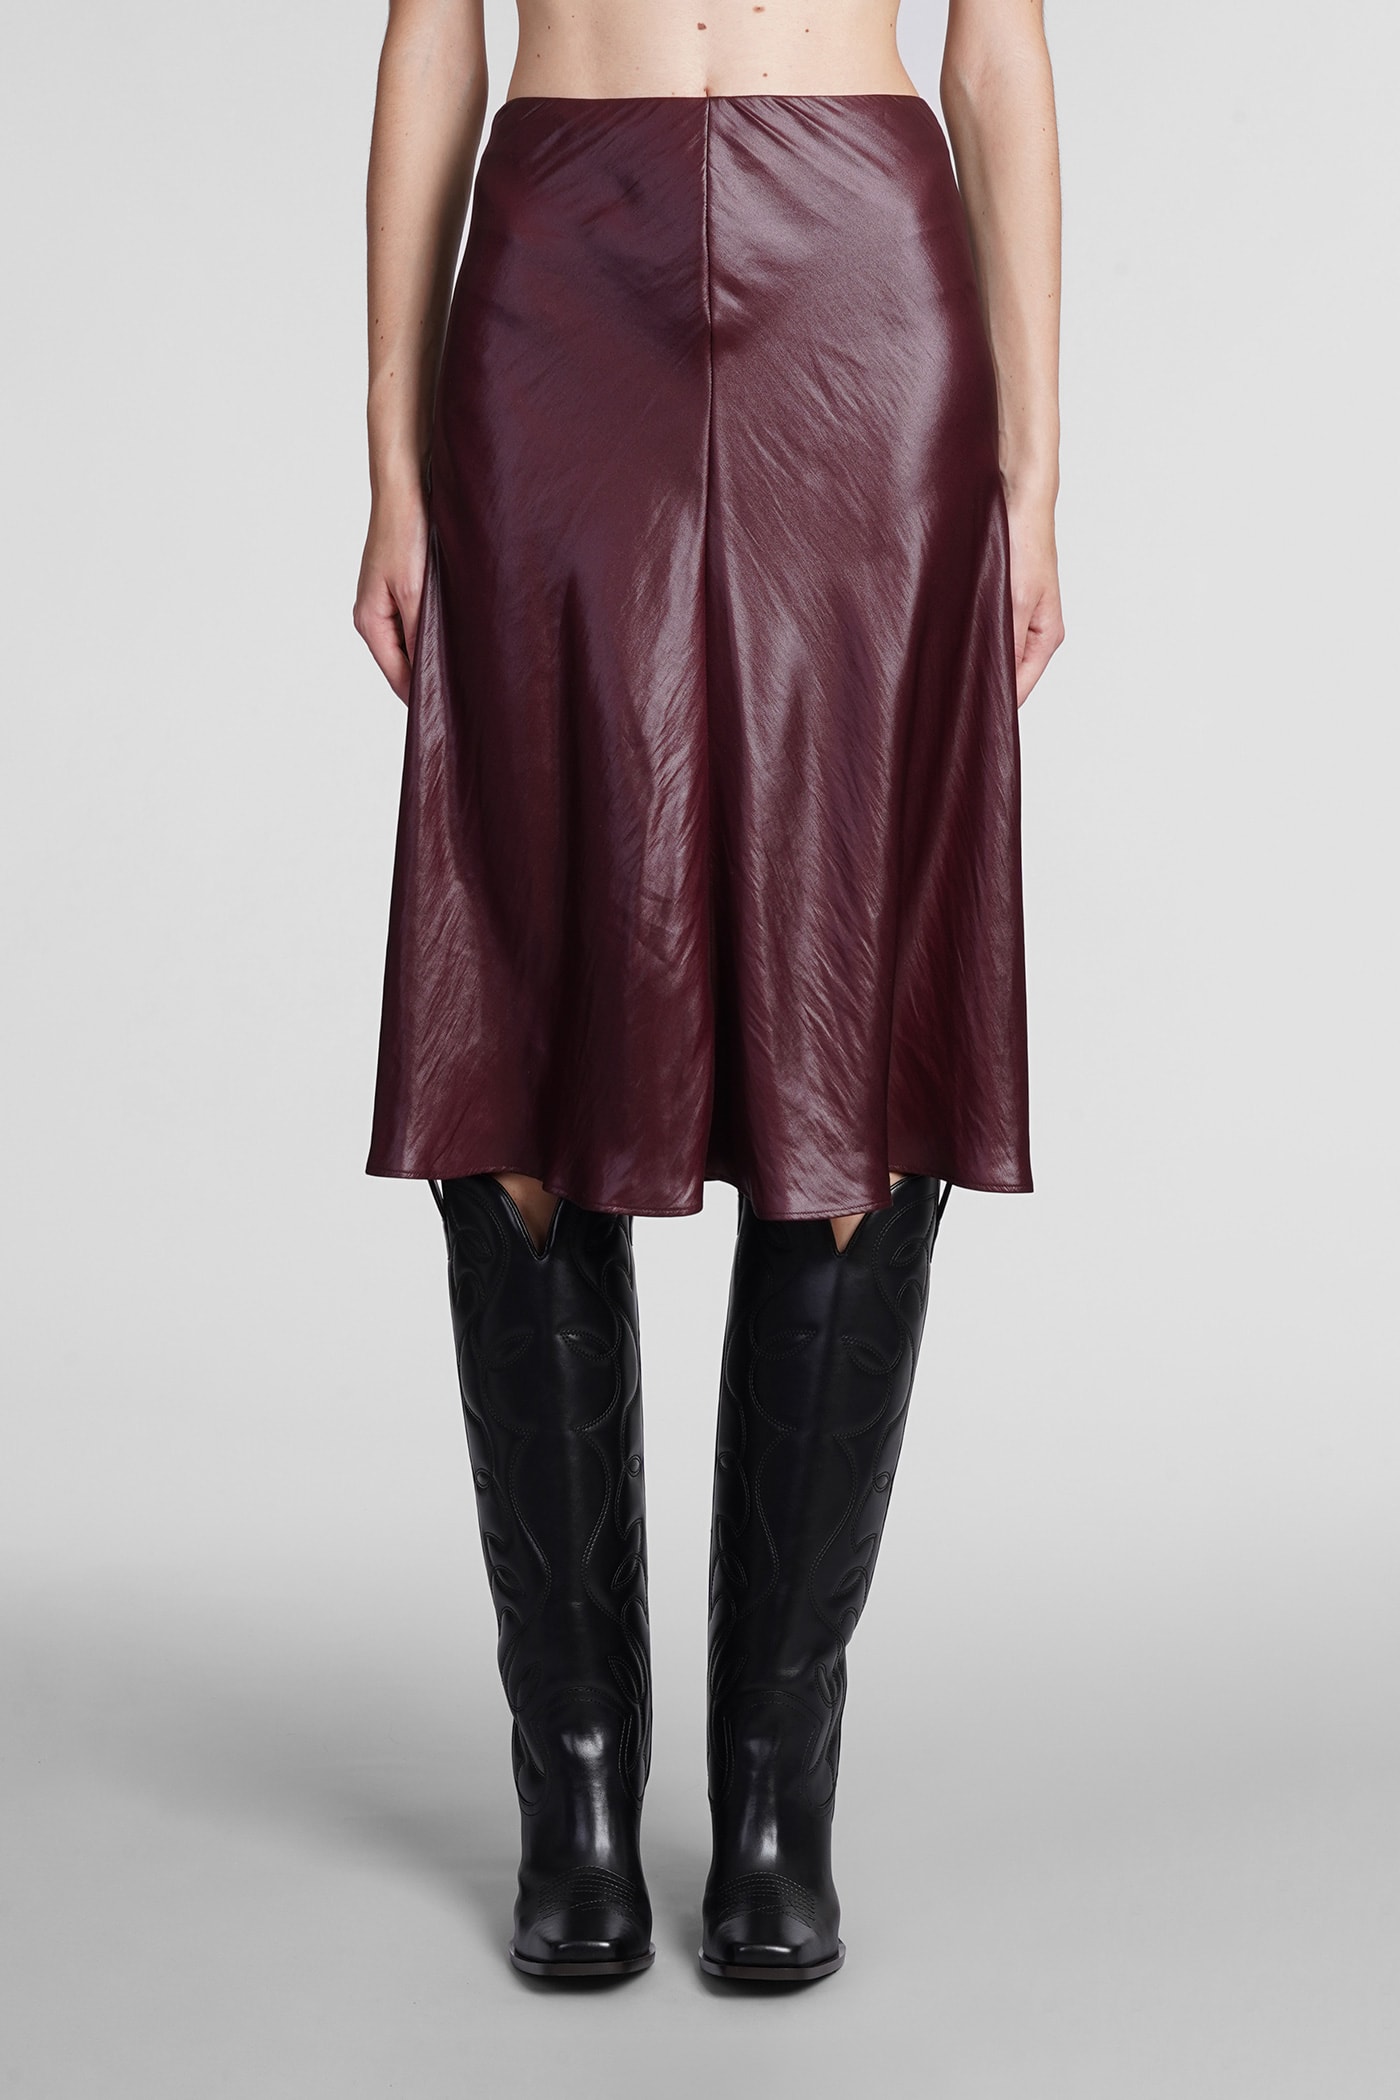 Stella McCartney Skirt In Viola Polyester